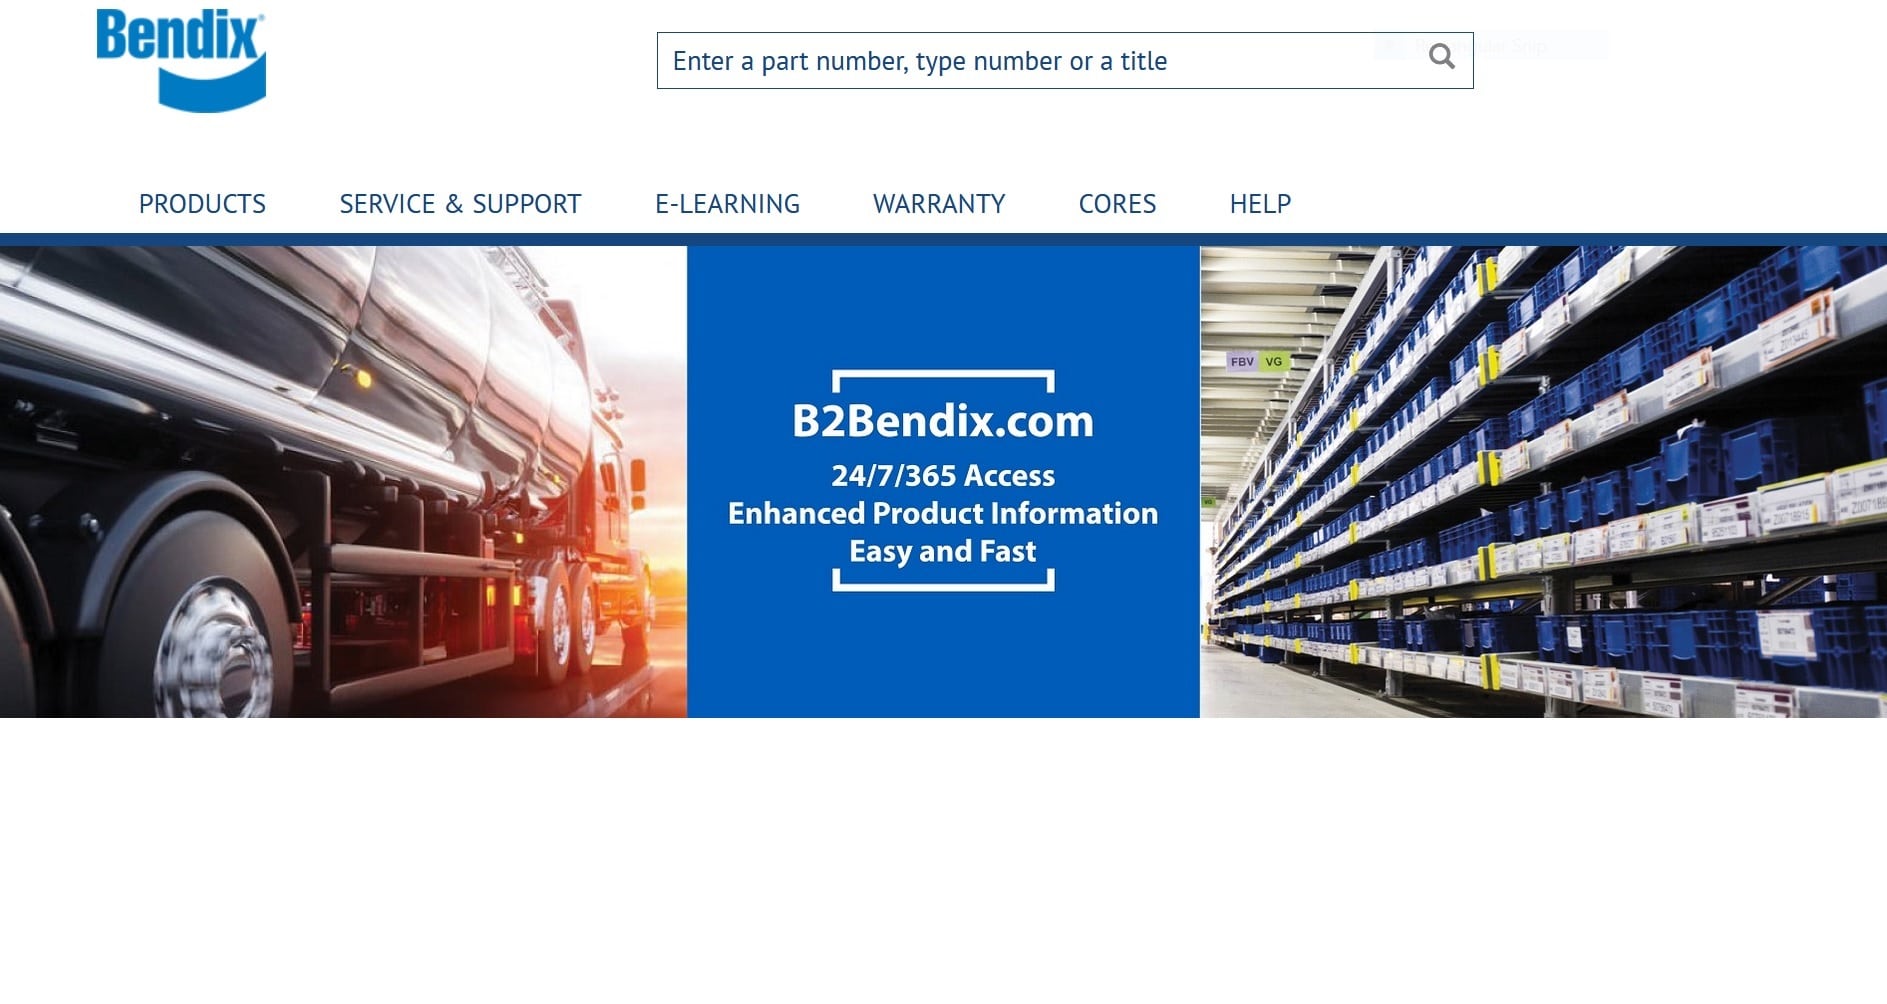 Bendix has launched a new e-commerce Website